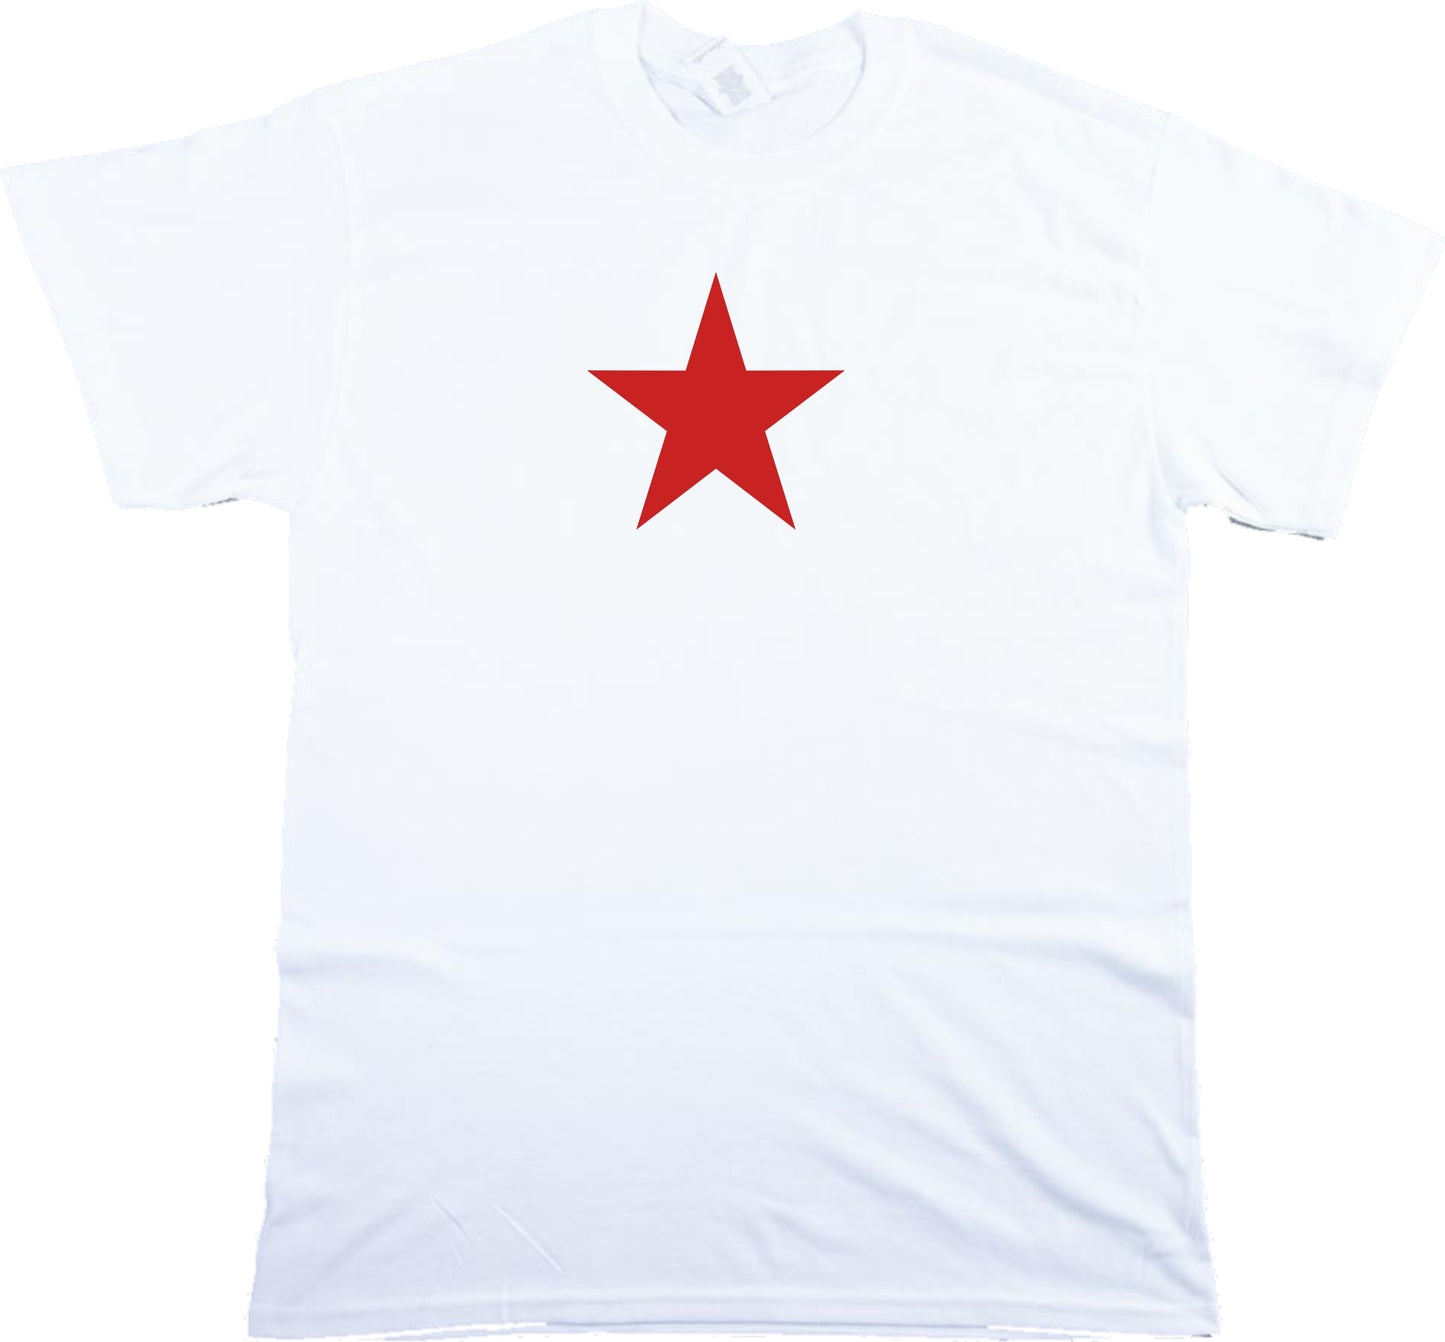 Red Star T-Shirt - Retro Punk, Sub Culture, Protest, Various Colours